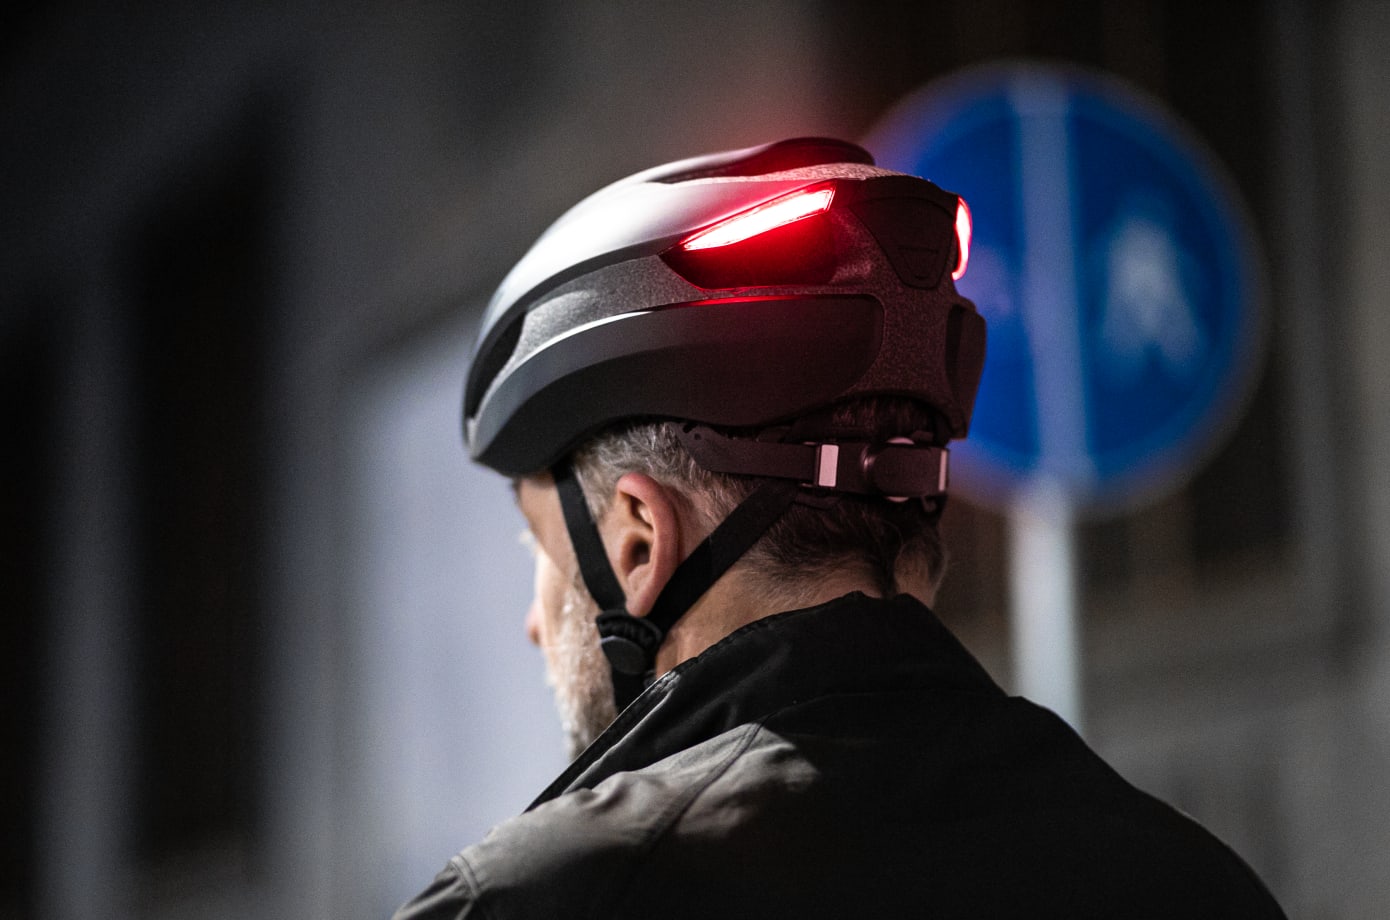 Lumos Ultra: The New Standard In Bike Helmets